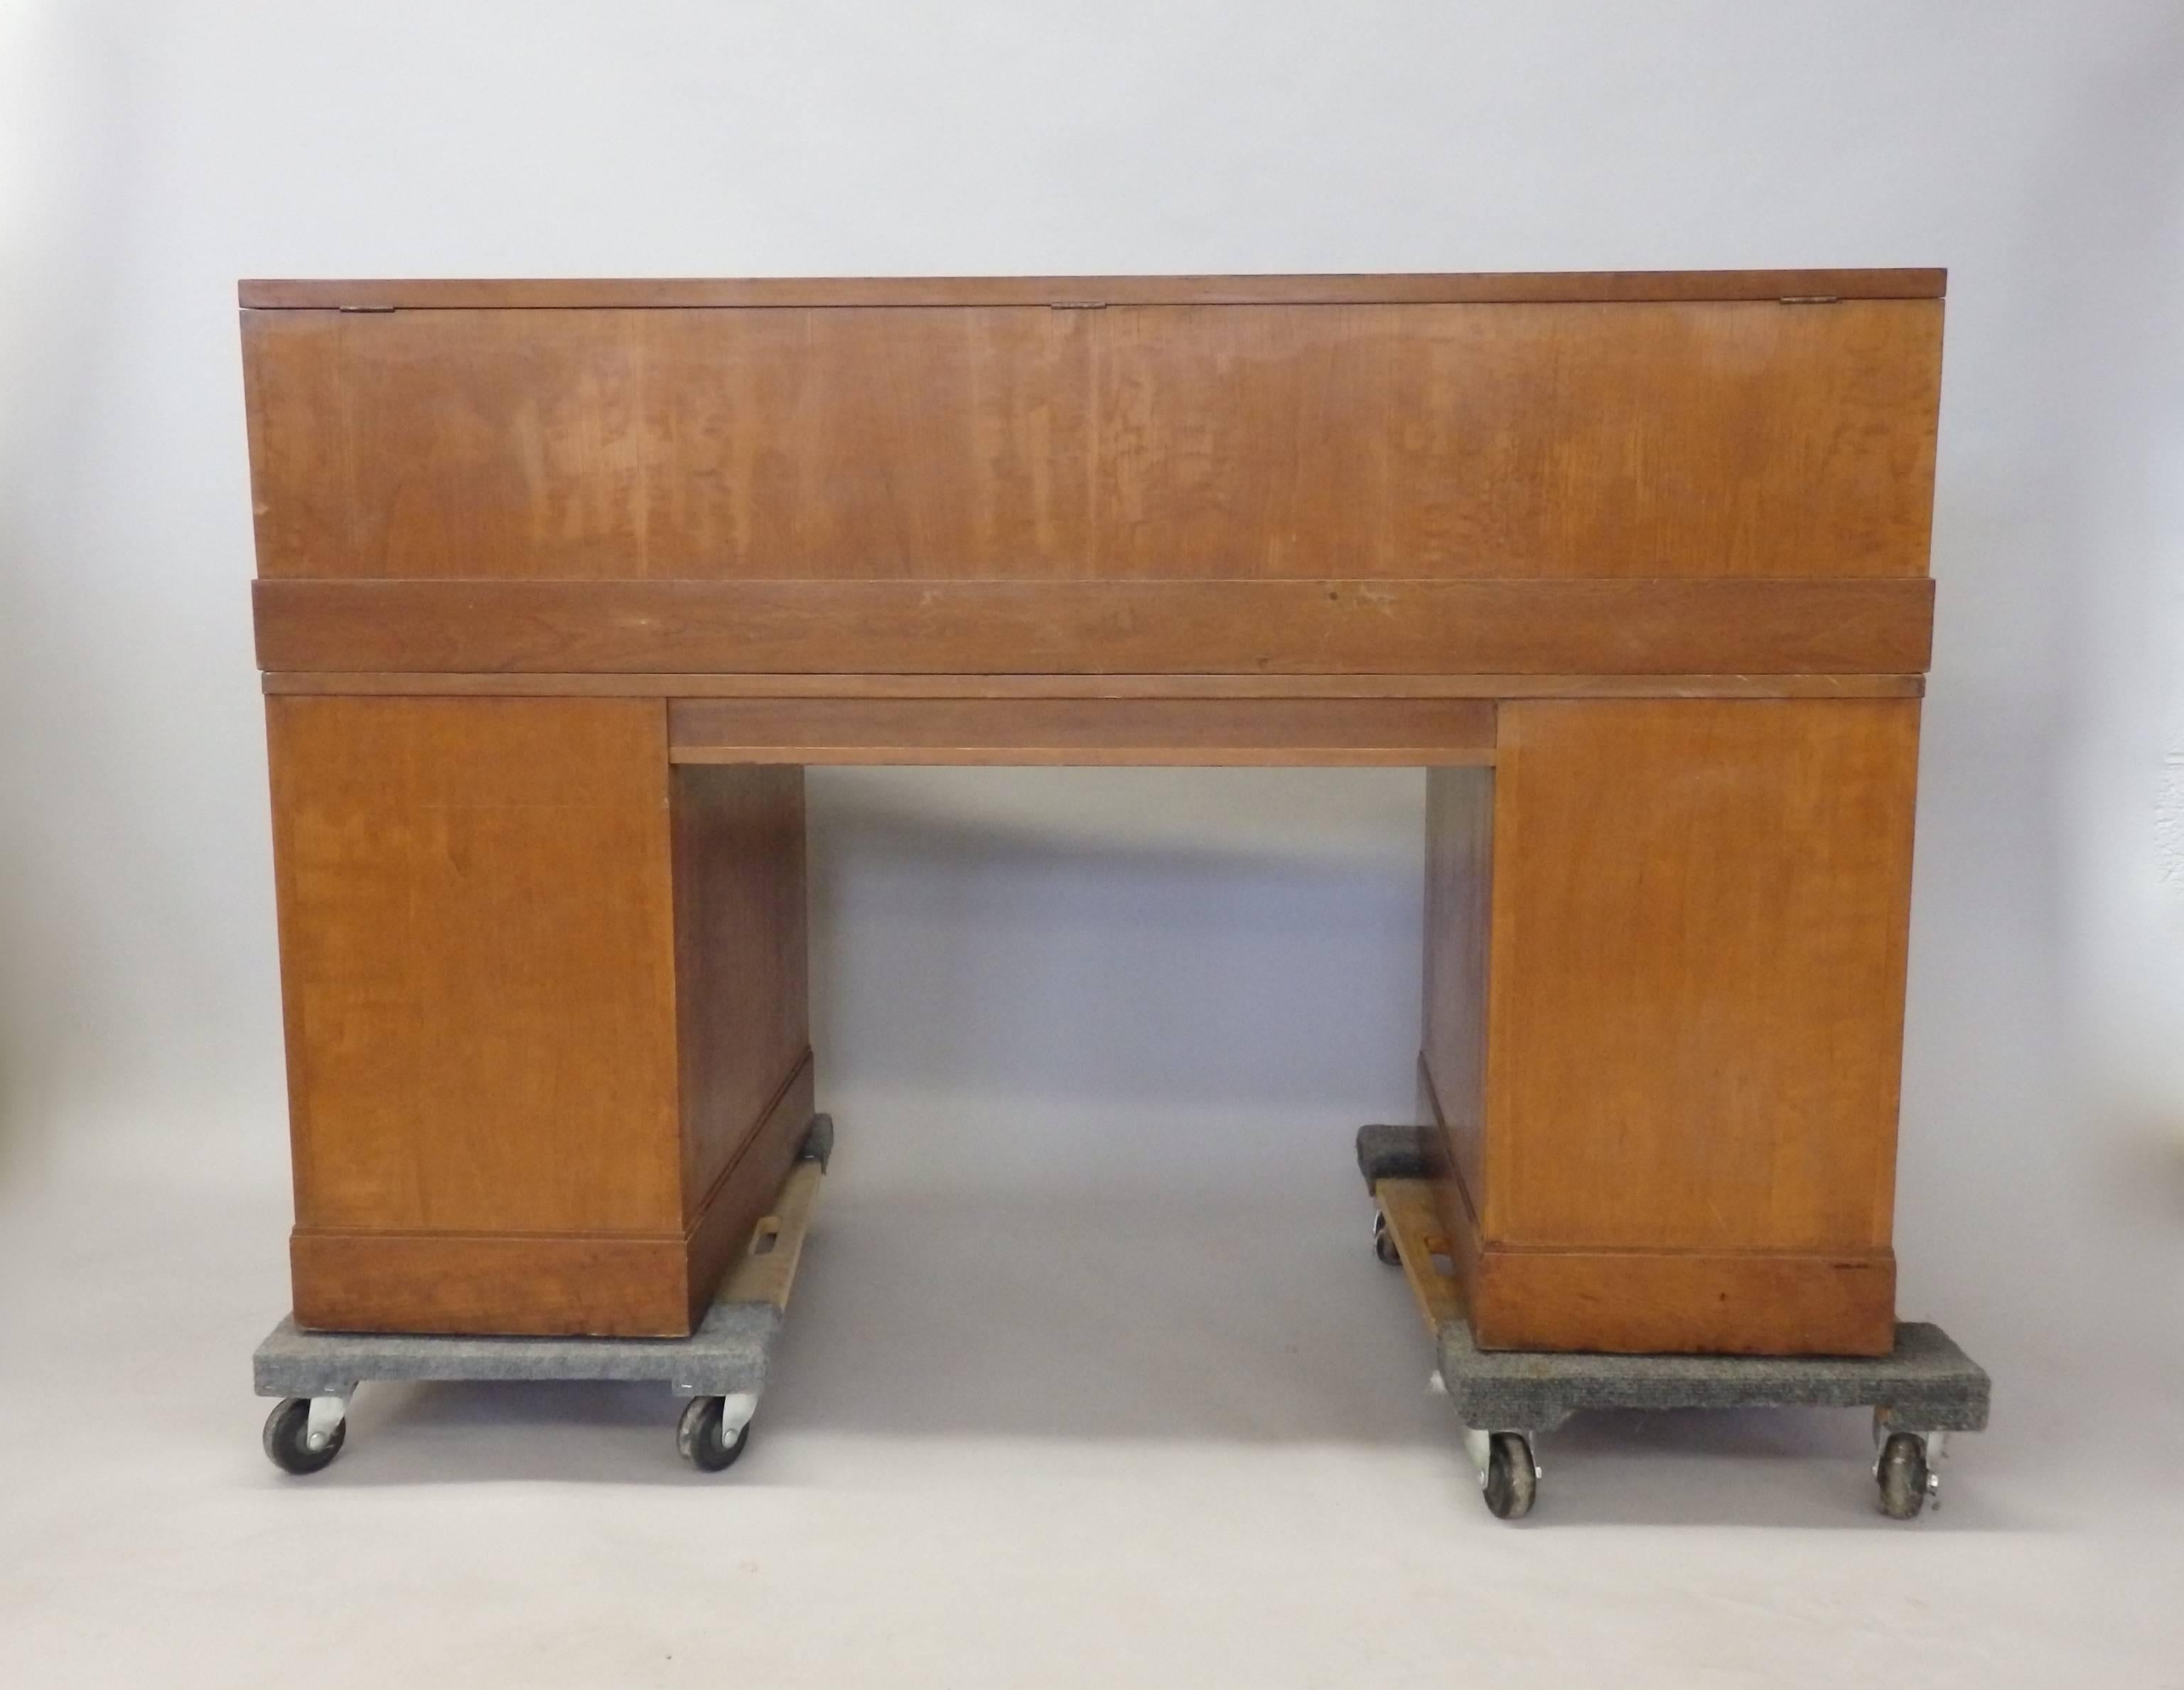 Brushed Johann Tapp Custom Built Art Deco era Cartoonist Desk with Hidden Compartments For Sale